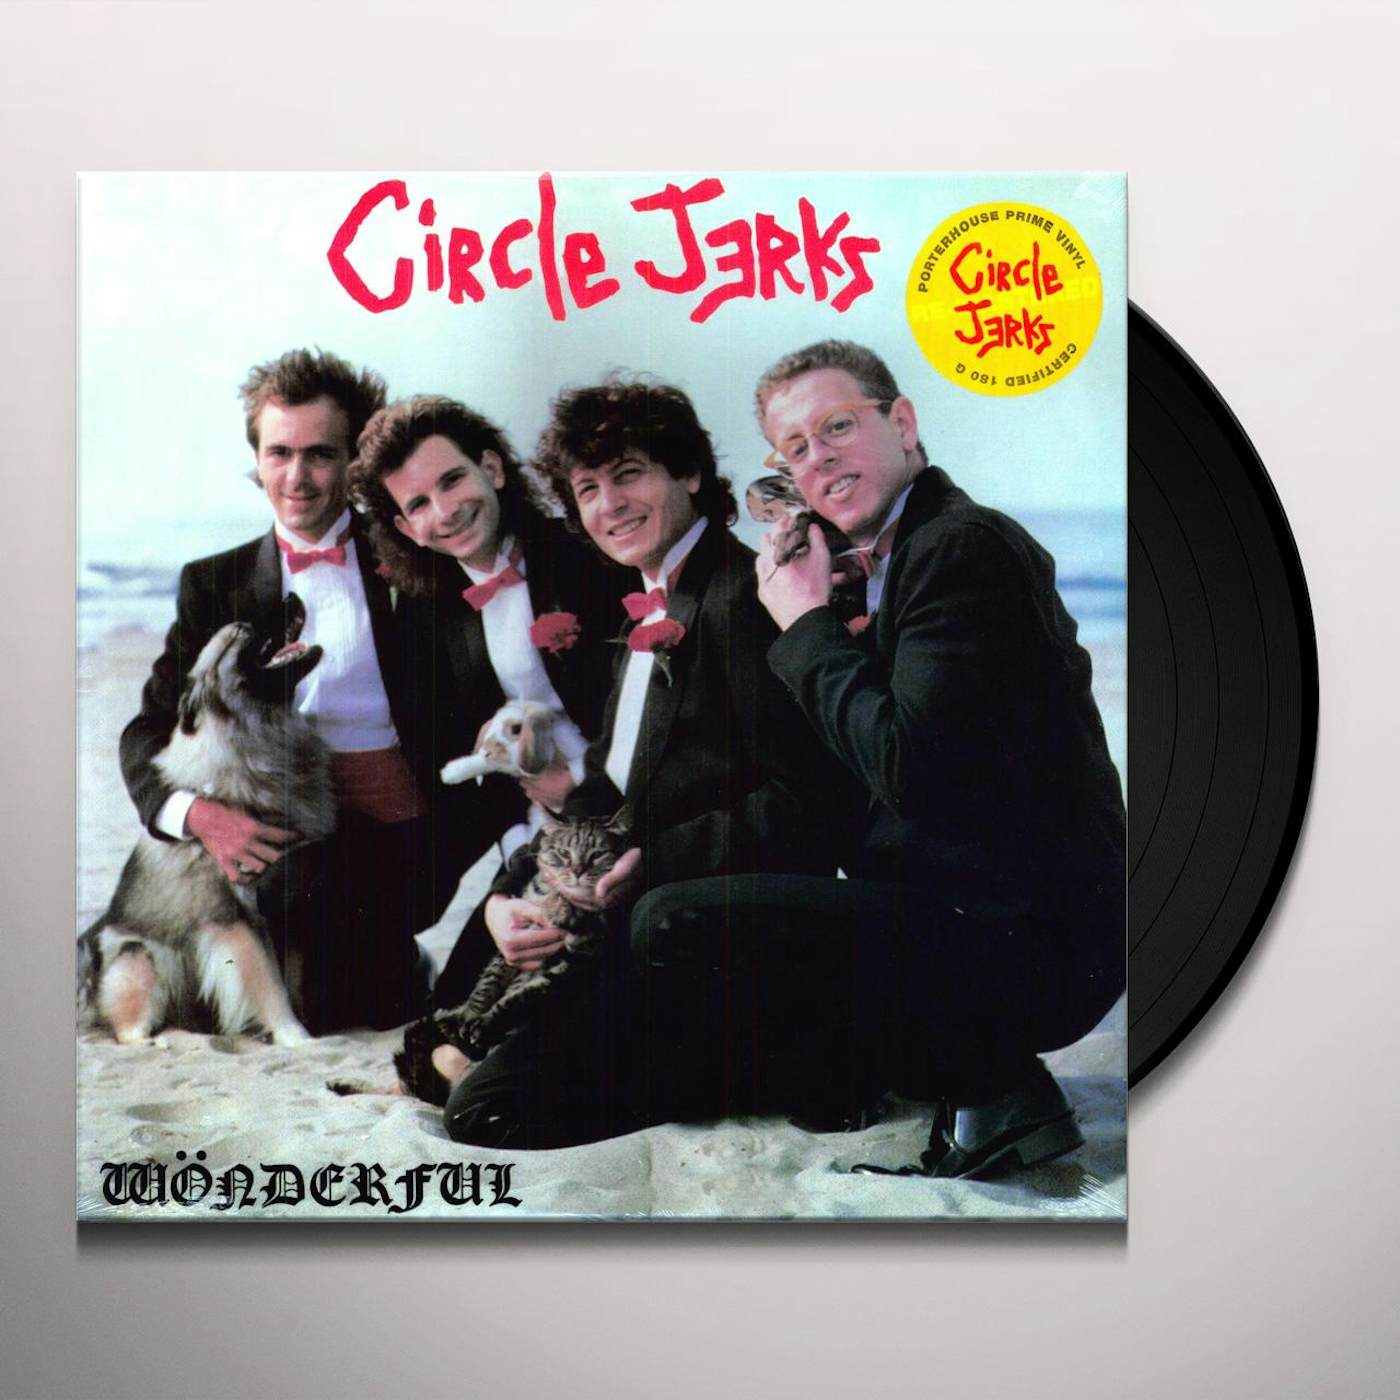 Circle Jerks Wonderful Vinyl Record